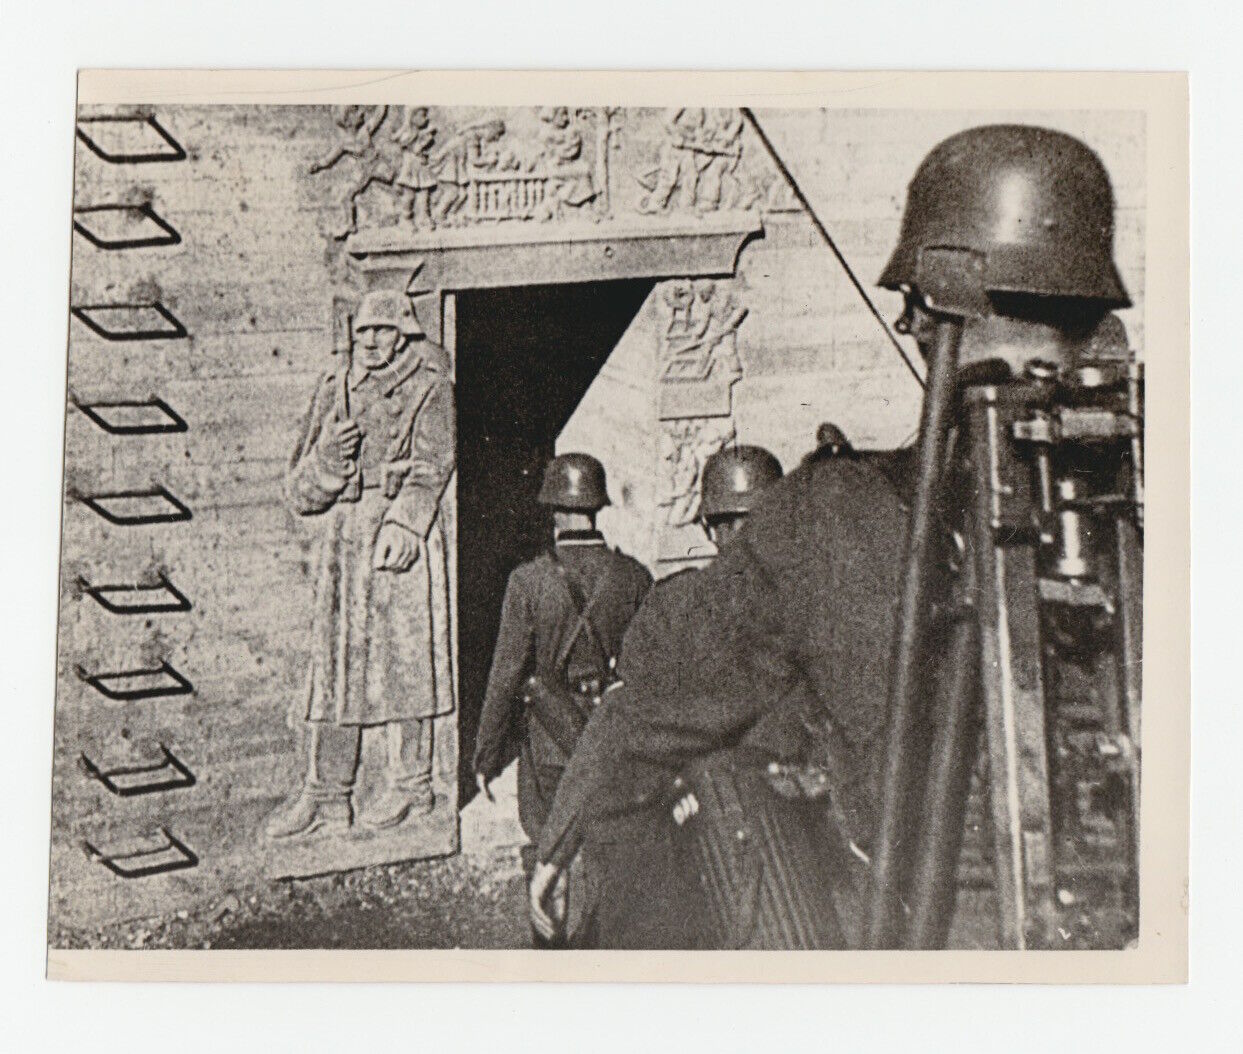 ORIG WWII Press Photo 1939 German Soldiers Enter Bunker on Siegrief Line